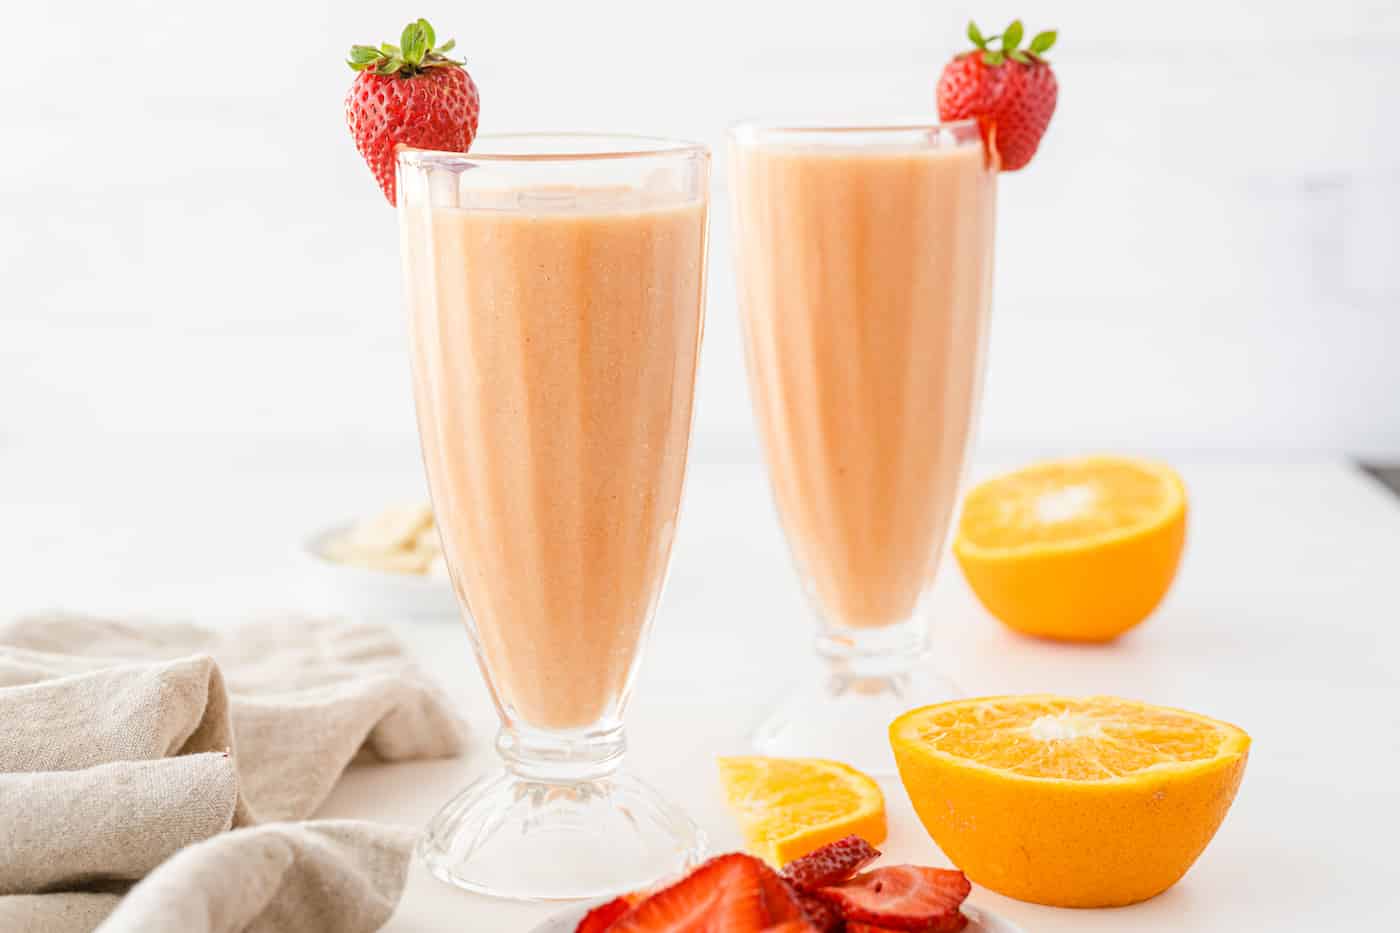 https://www.cleaneatingkitchen.com/wp-content/uploads/2022/02/strawberry-mango-smoothie-hero-1.jpg